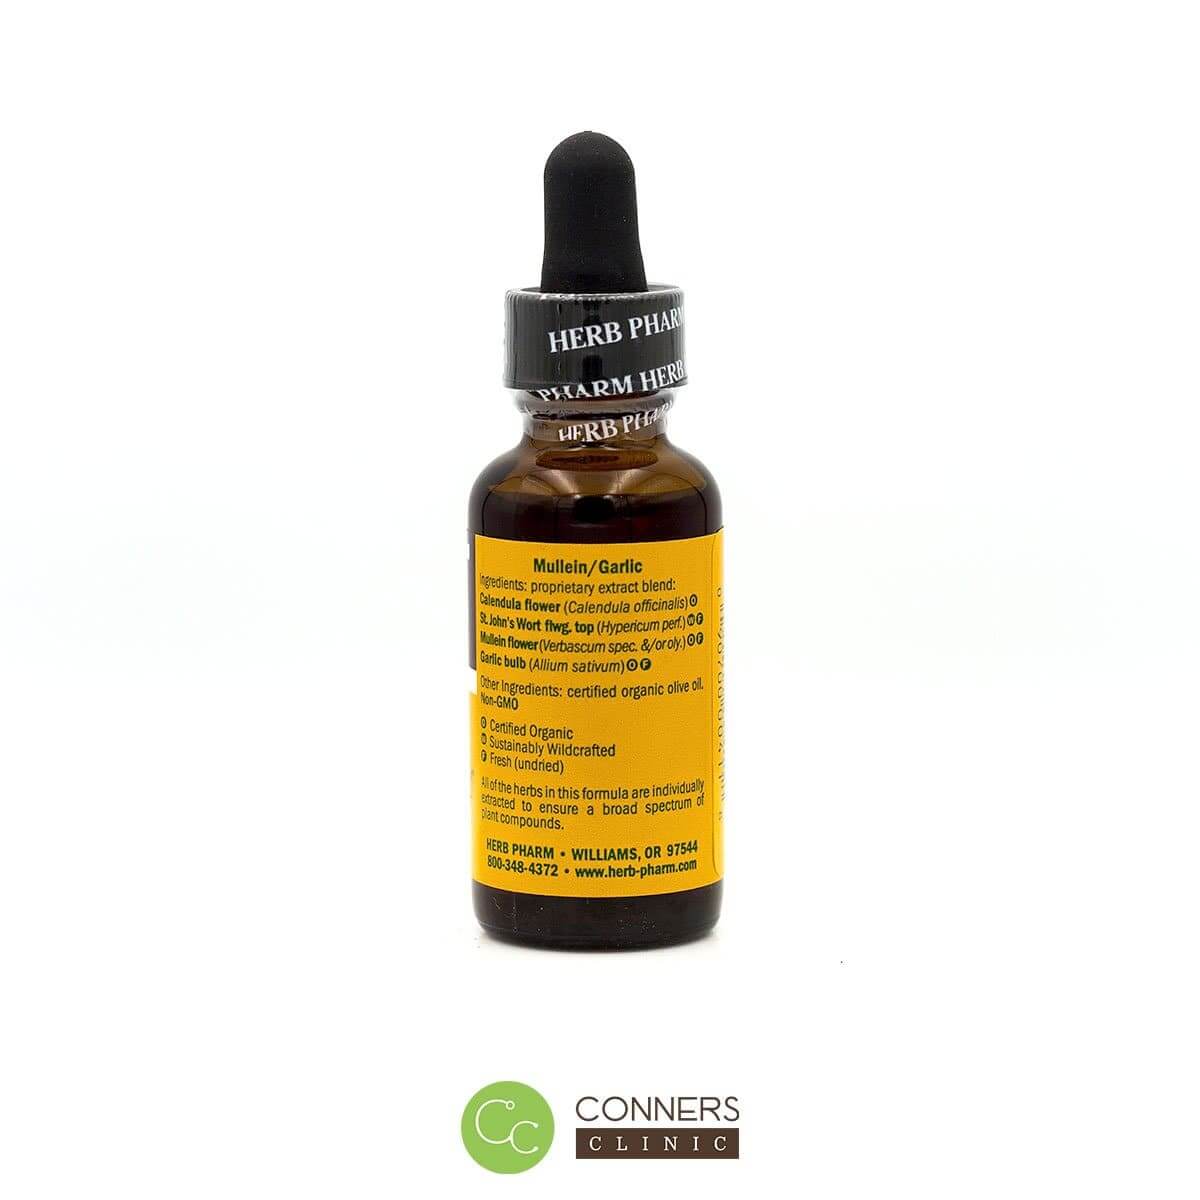 Mullein/Garlic Ear Oil - Herb Pharm Herb Pharm Supplement - Conners Clinic